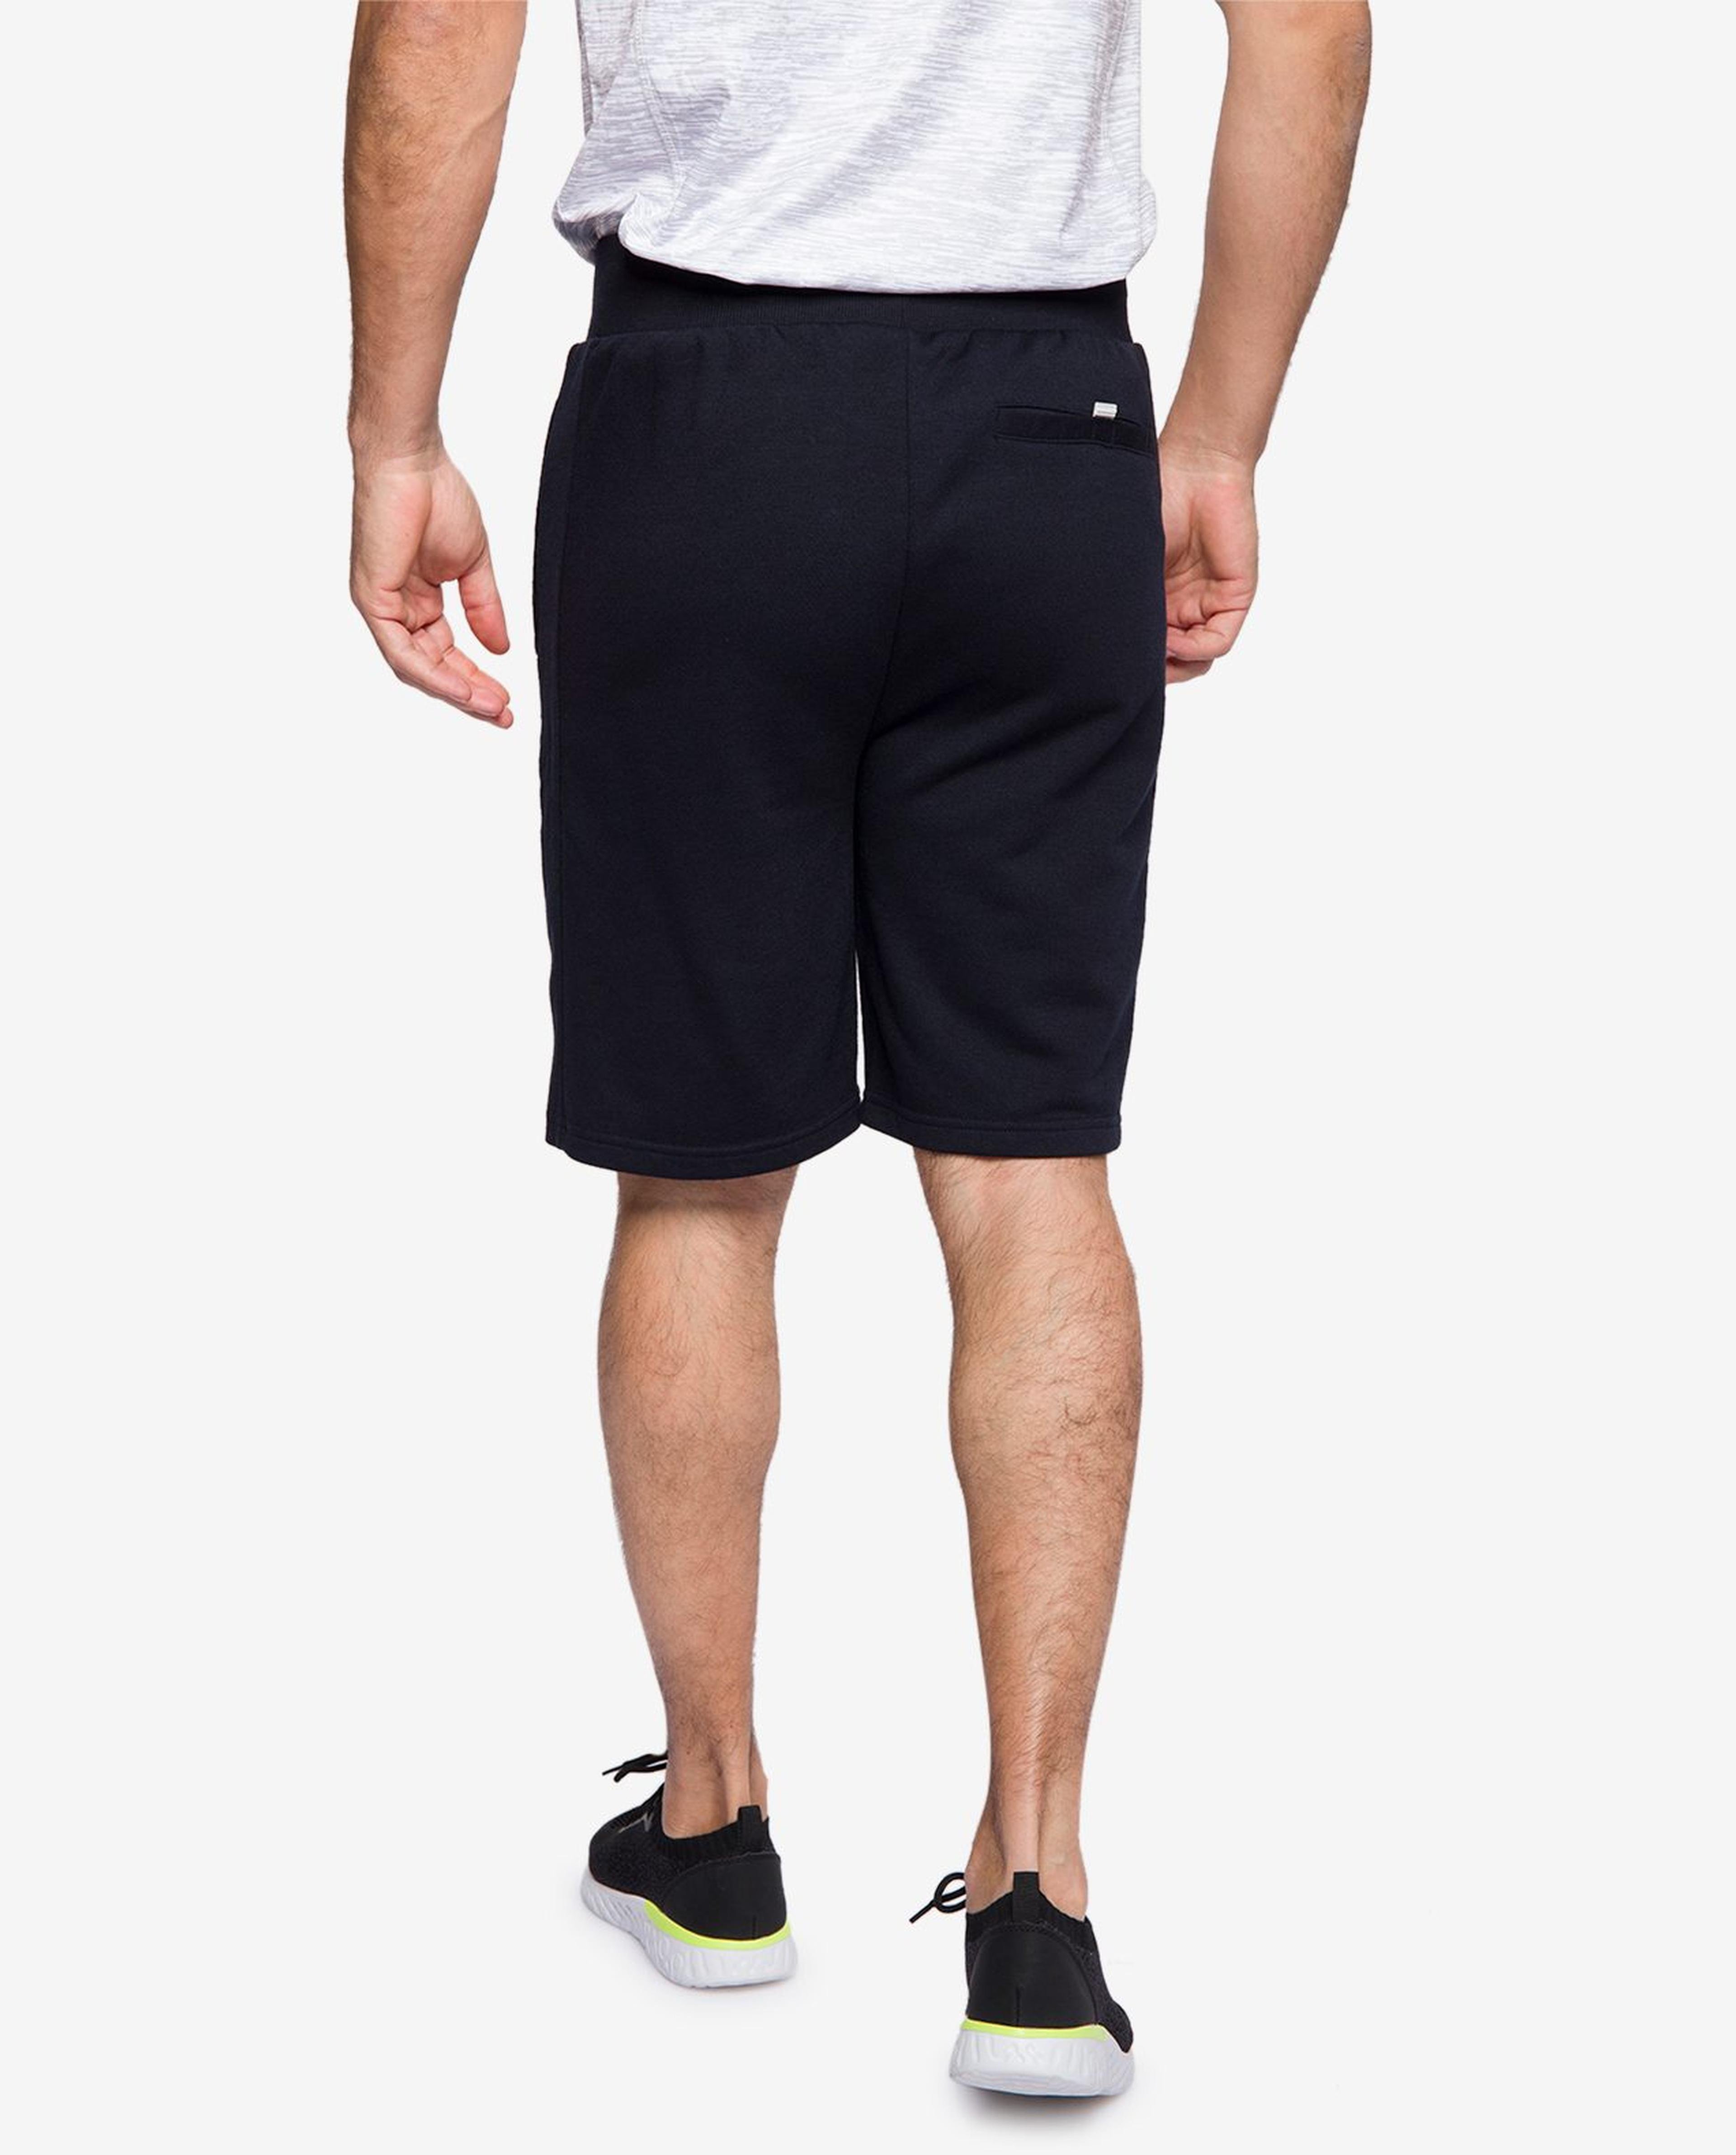 Black Casual Shorts